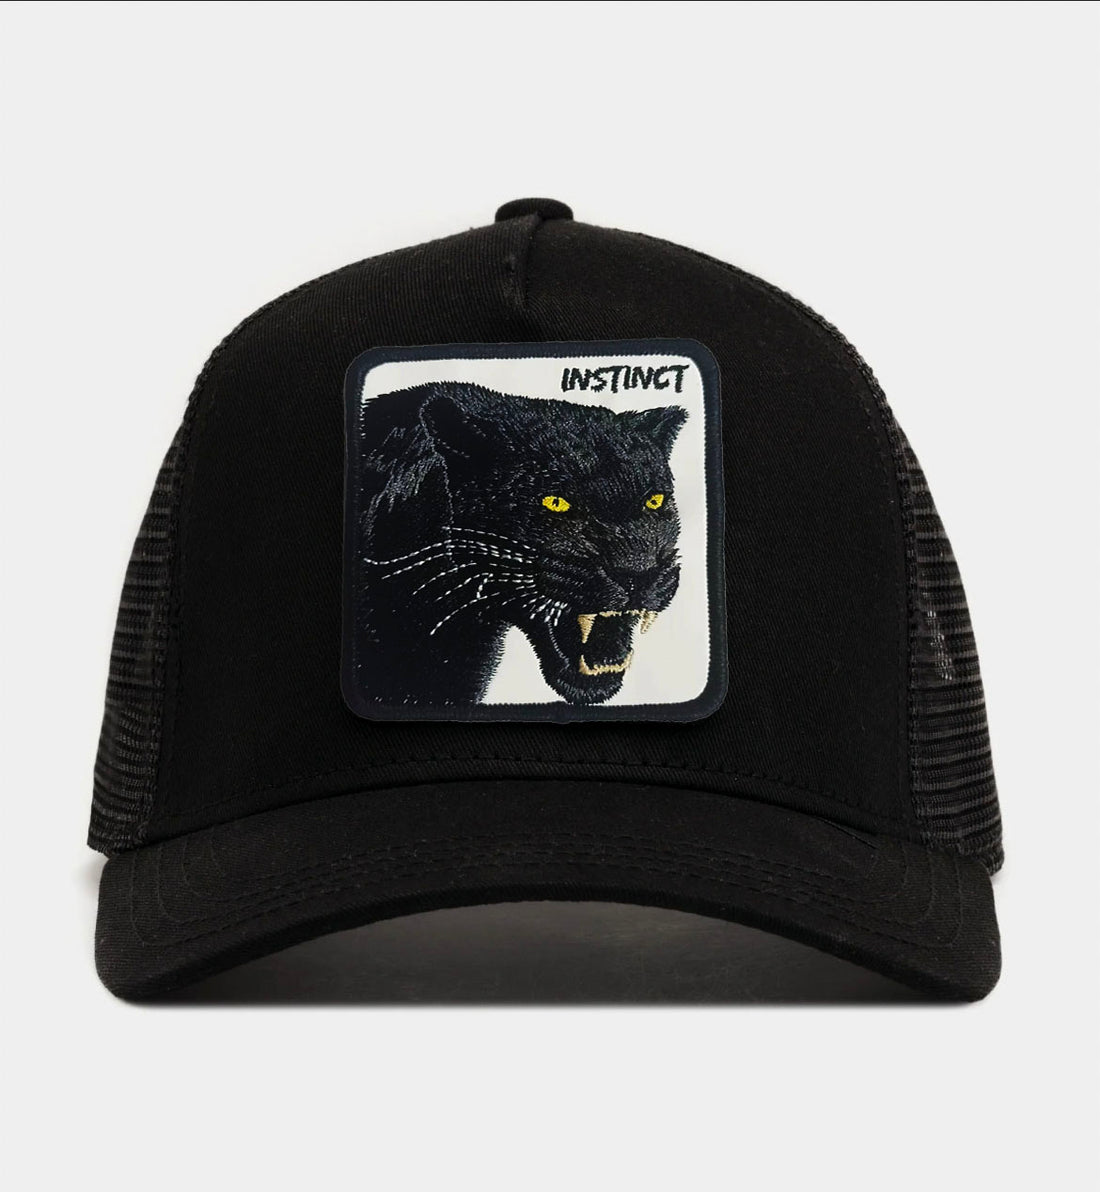 Black Panther - "instinct" Trucker Hat - Black